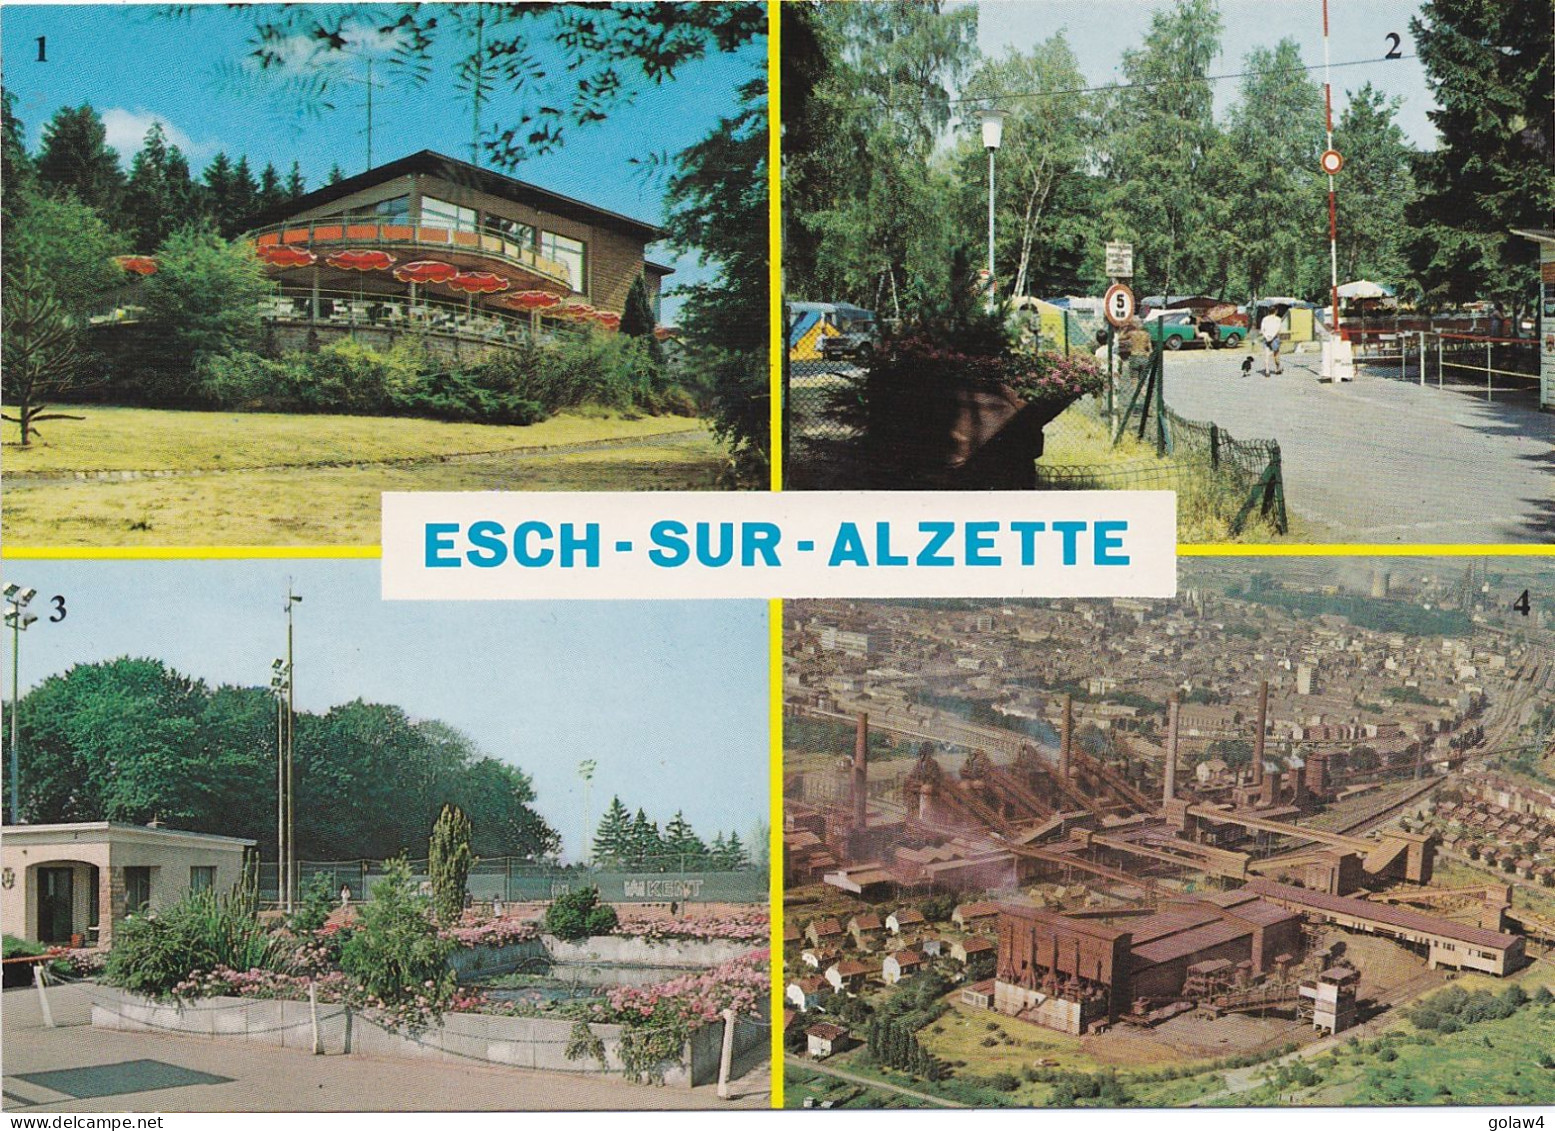 36567# ESCH SUR ALZETTE PAVILLON GALGENBIERG CAMPING JARDINS EDUCATIFS USINES SIDERURUGIQUE - Esch-Alzette